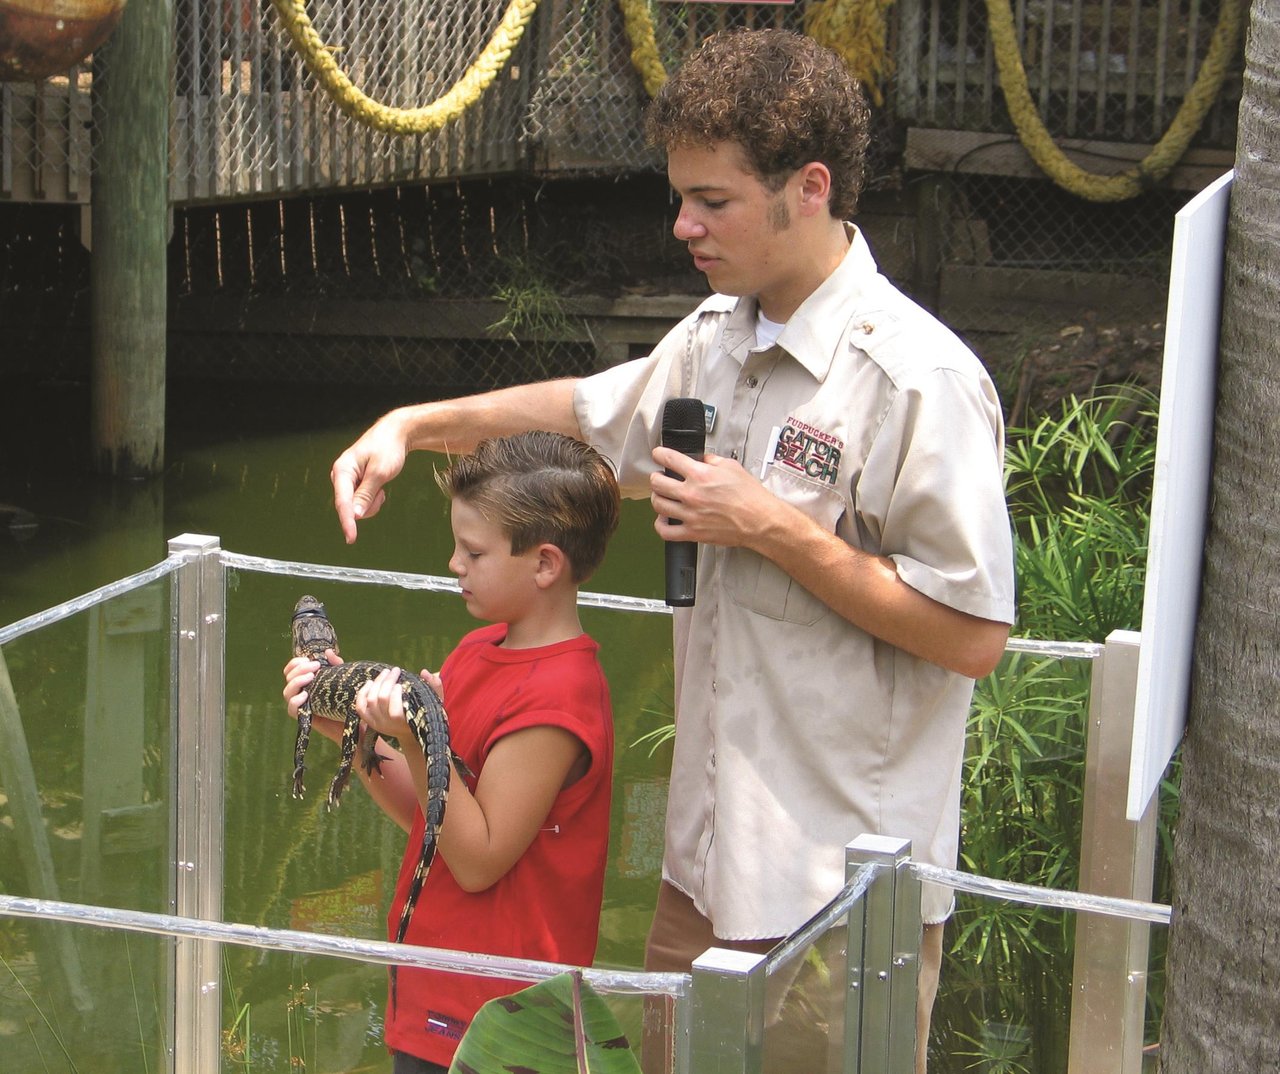 Fuds gator show with kid